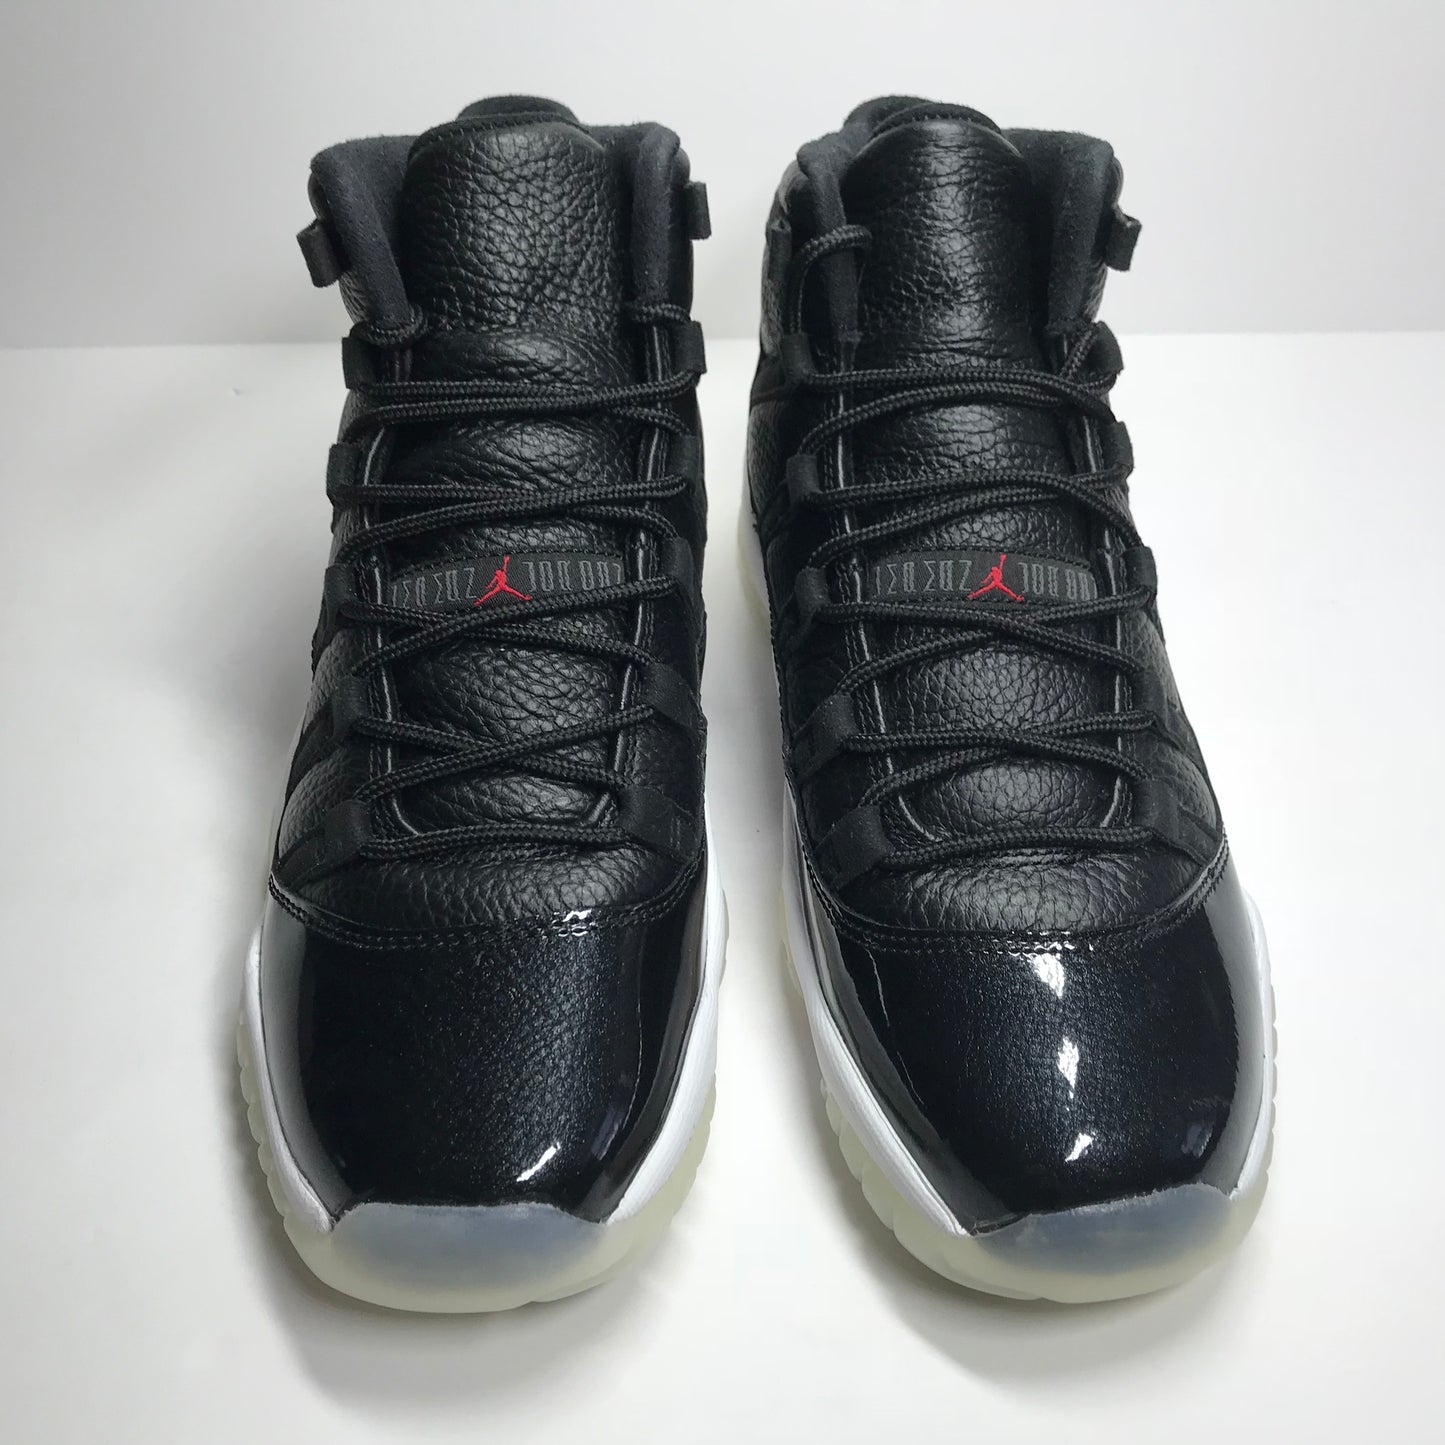 DS Nike Air Jordan 11 XI Retro BG 72-10 Size 7Y